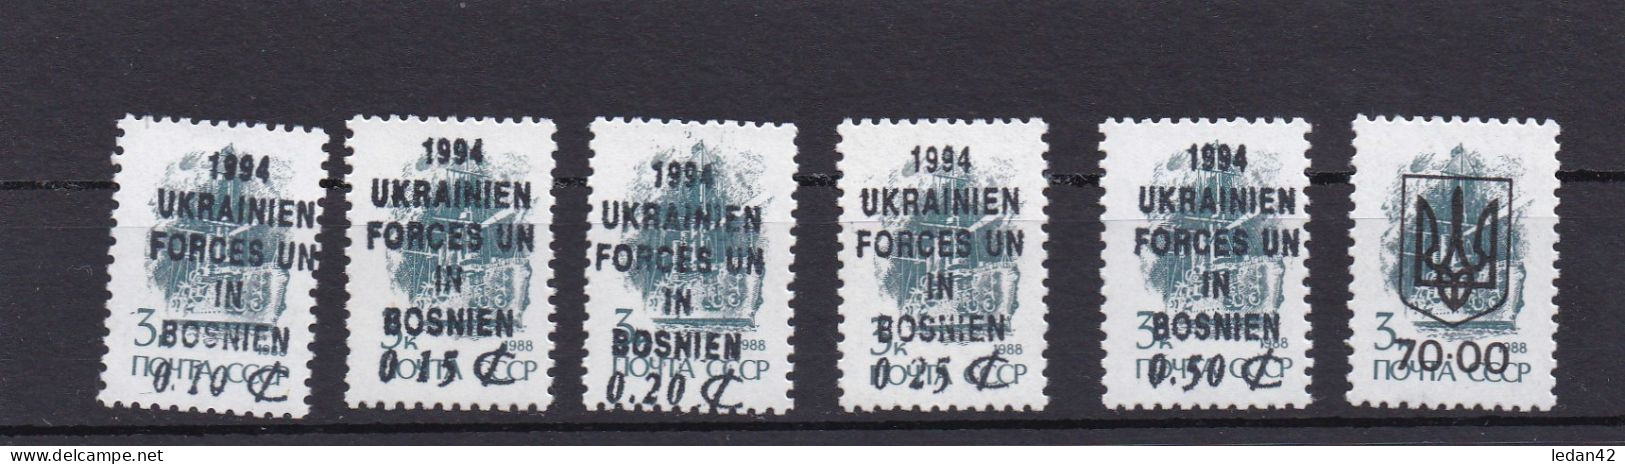 Ukraine 1994, Corps D'interposition U N En Bosnie ** - Ucrania